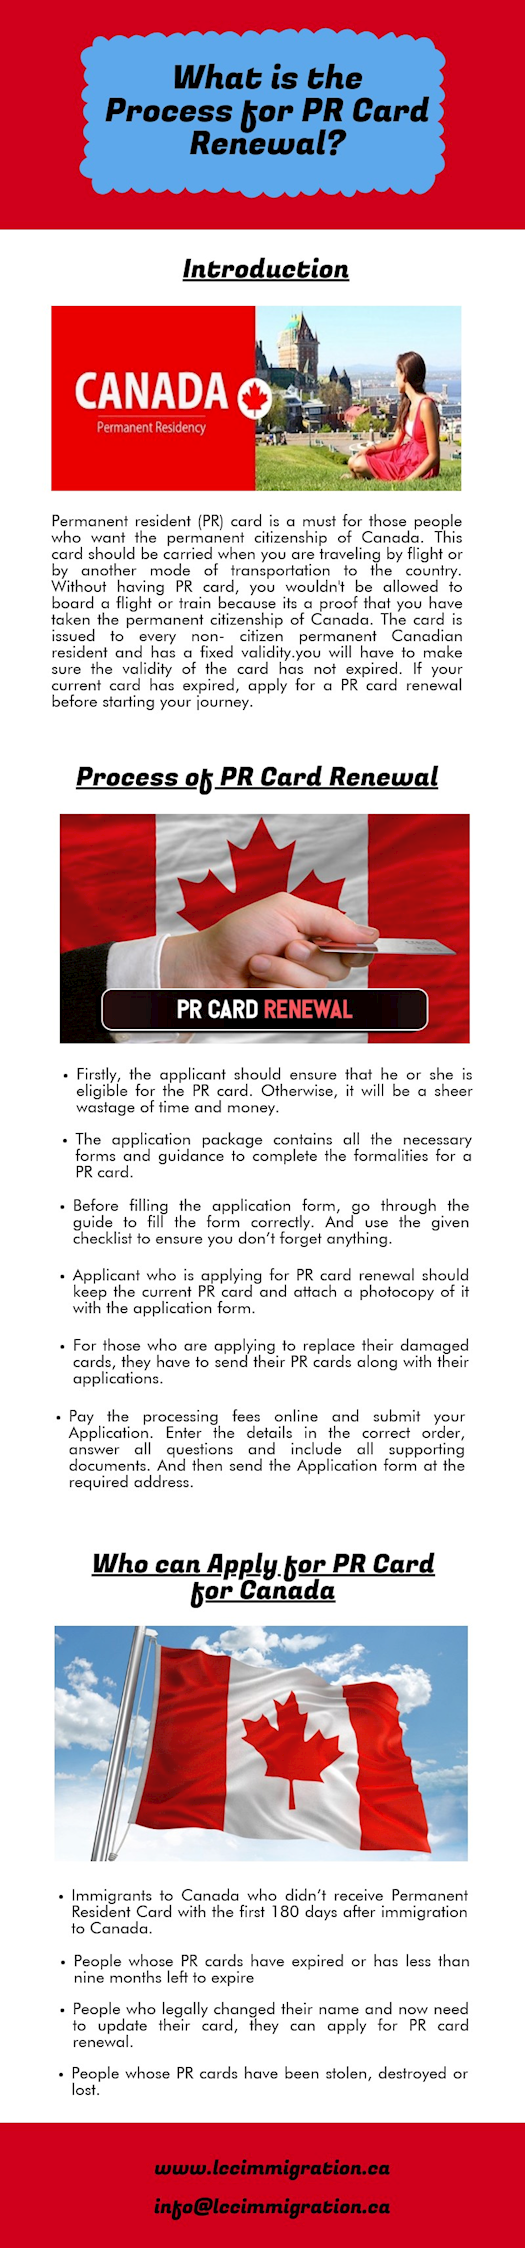 PR Card Renewal Procedure for Canada